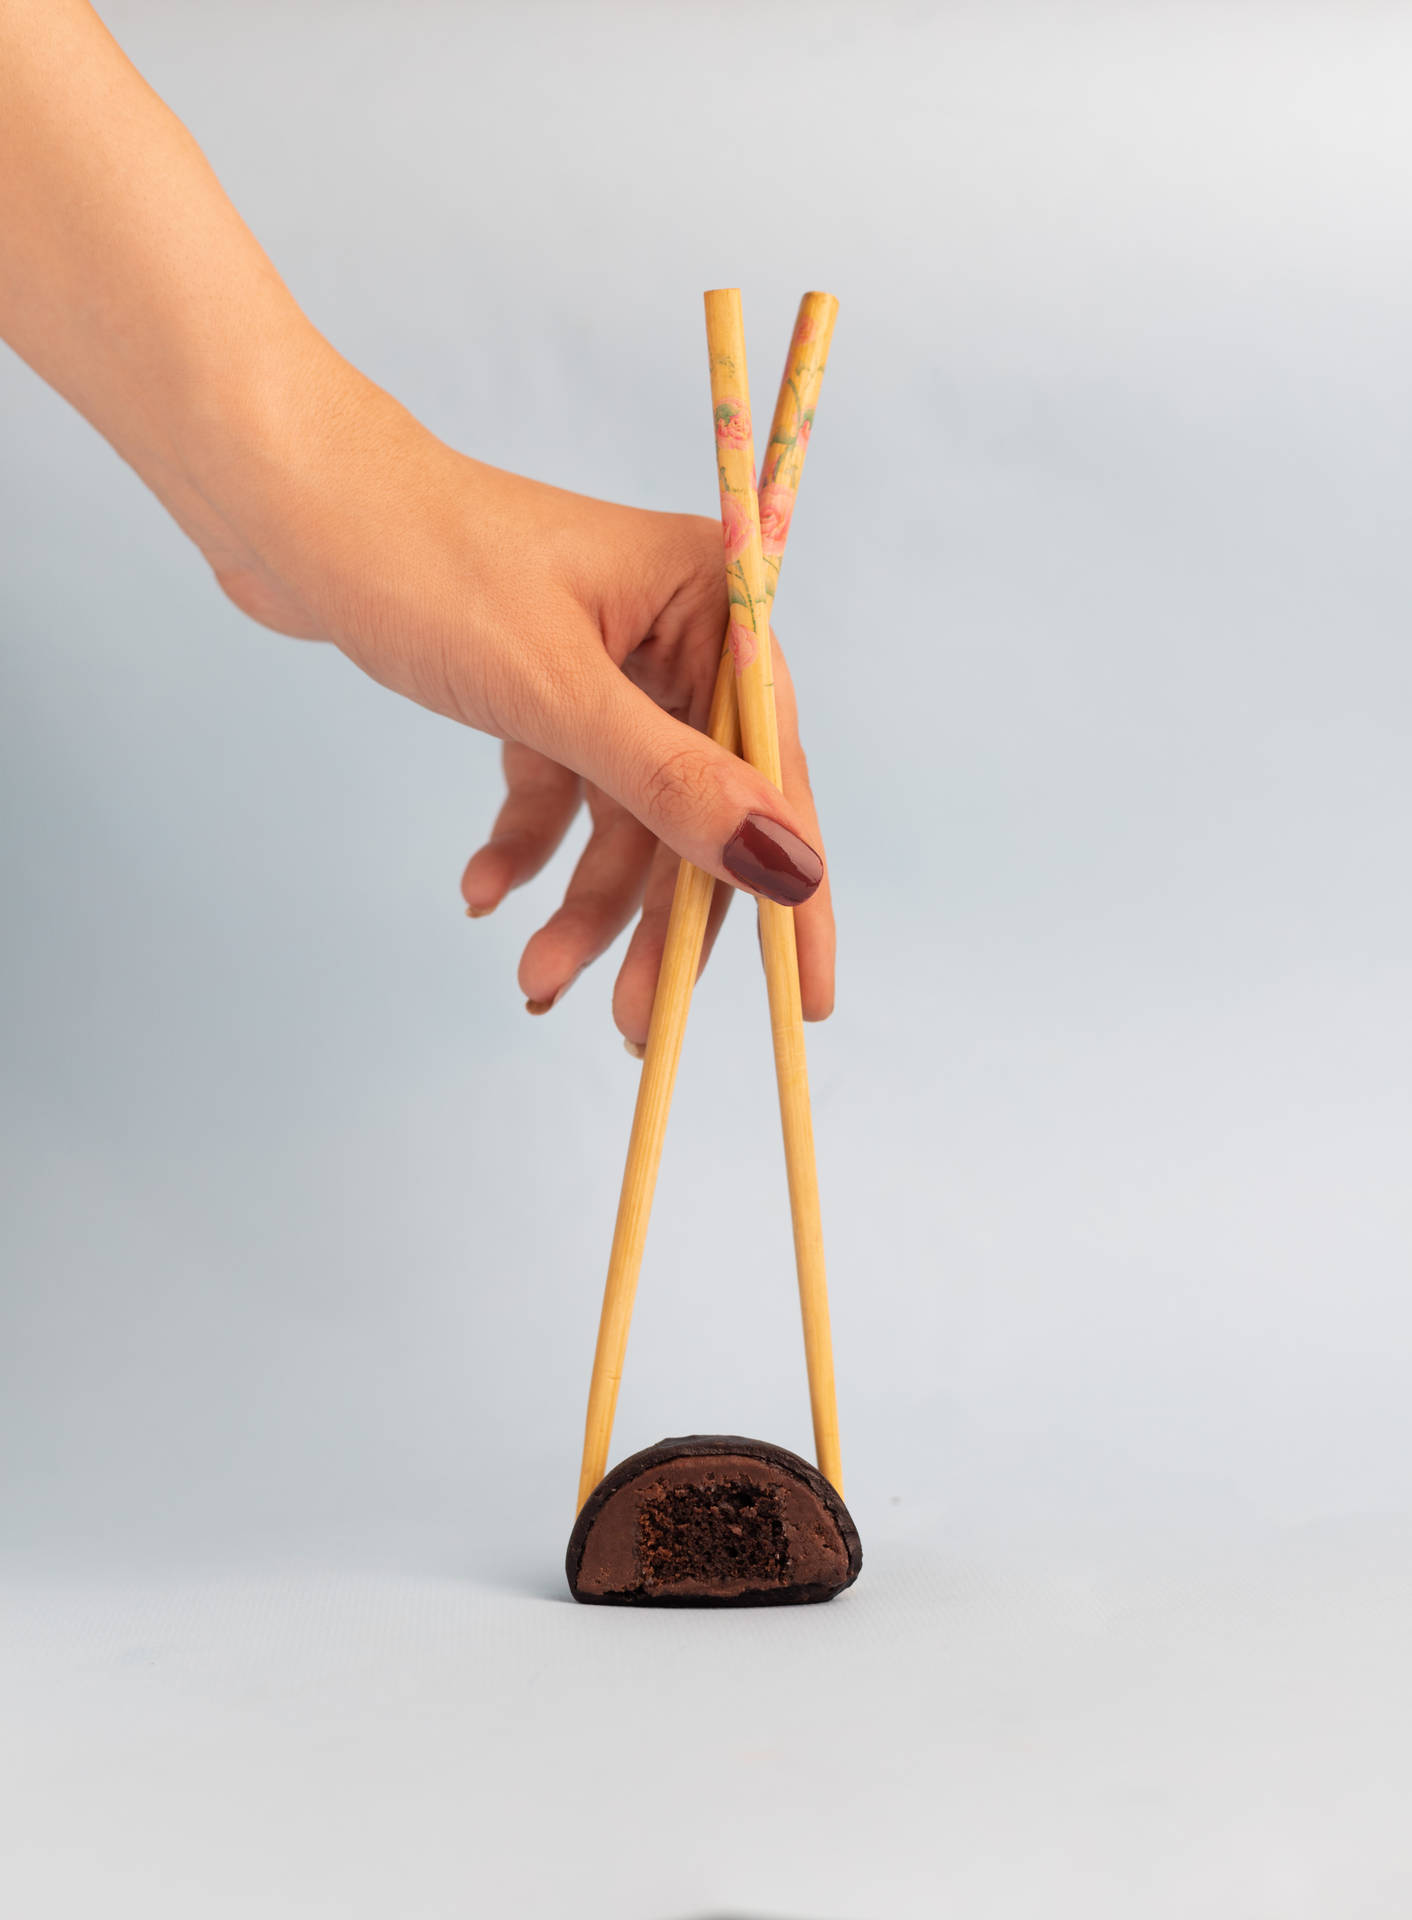 Modern Mochi With Chopsticks Background